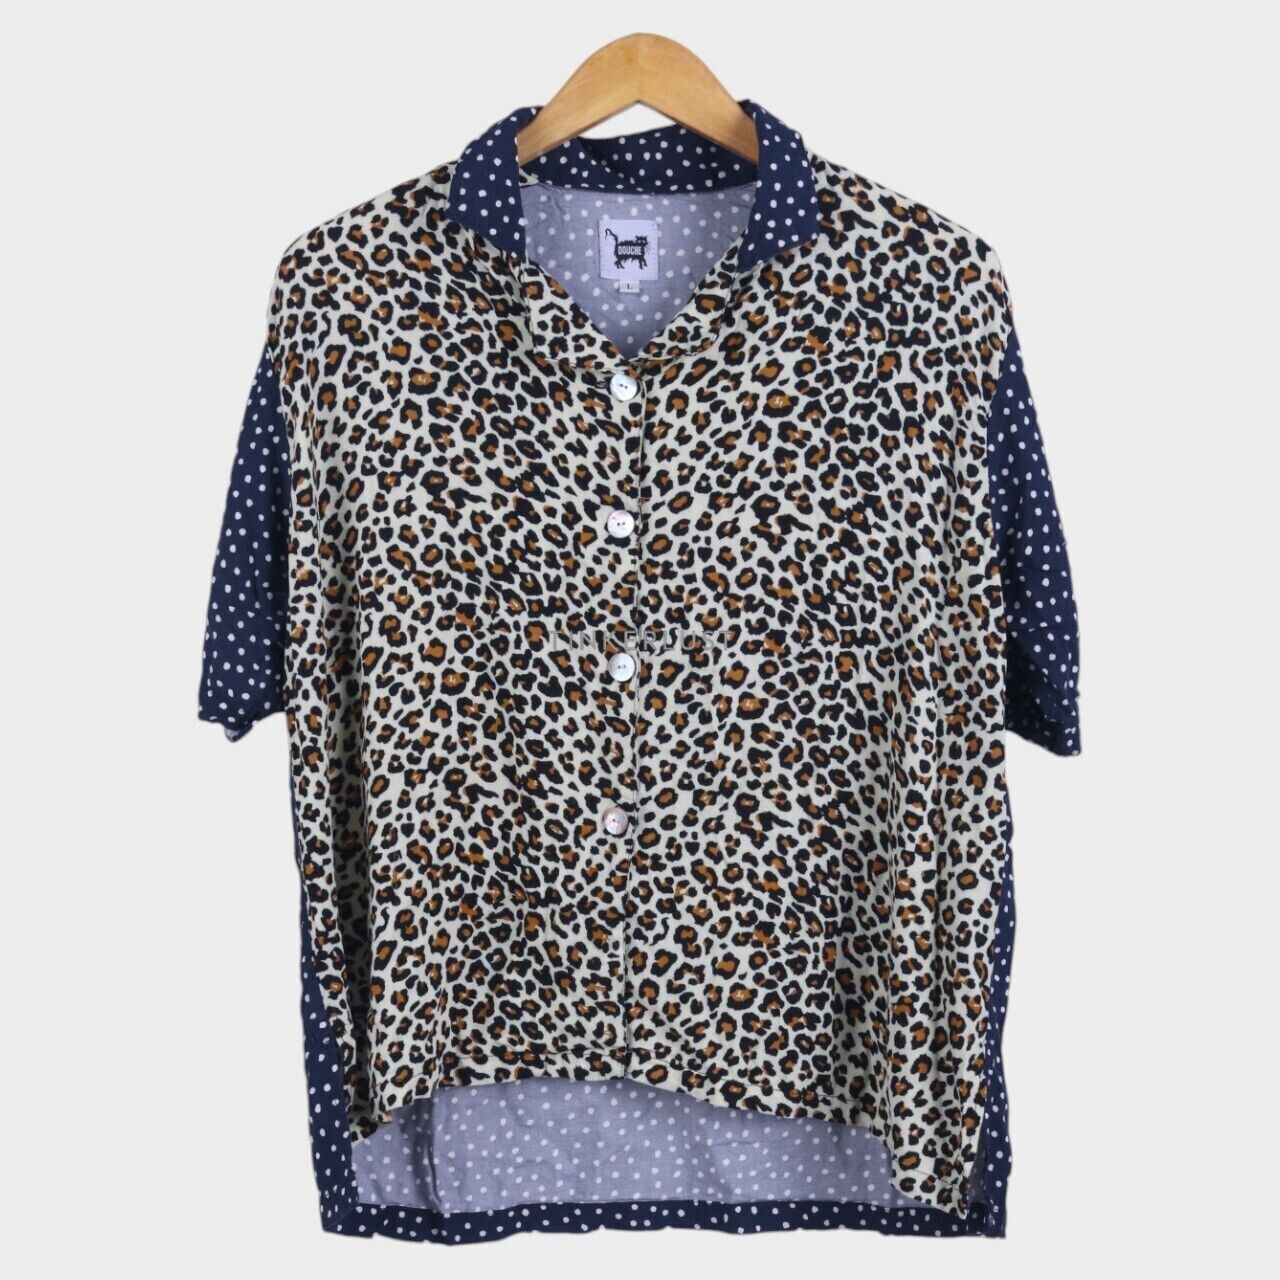 Douche Leopard Polkadot Shirt